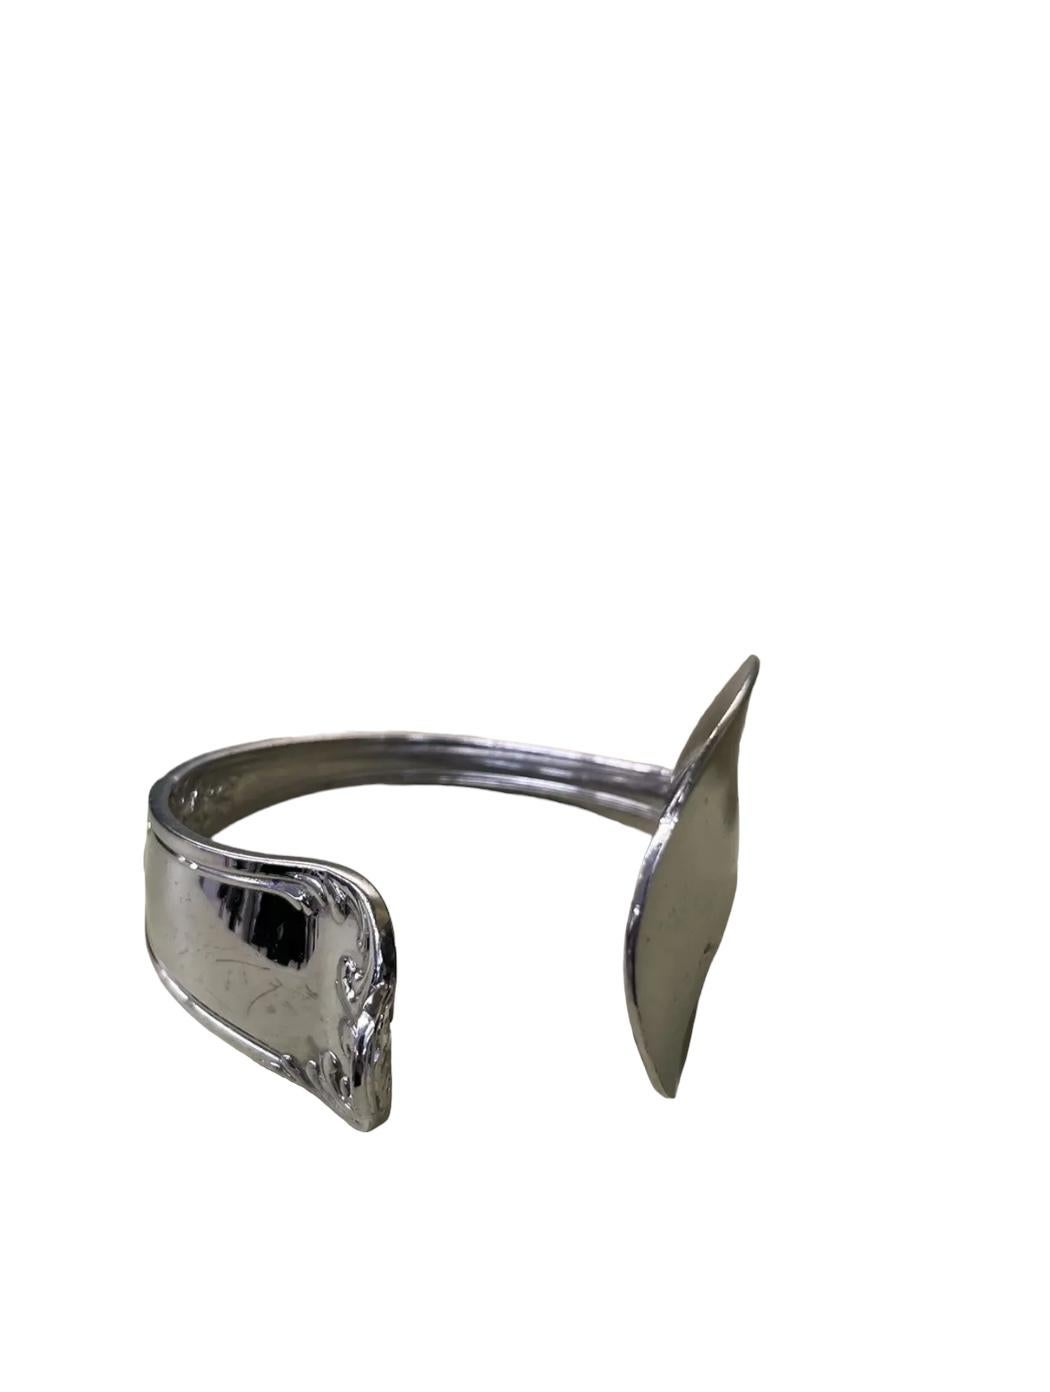 Women's or Men's Maison Margiela Artisanal Silver Spoon Bracelet For Sale